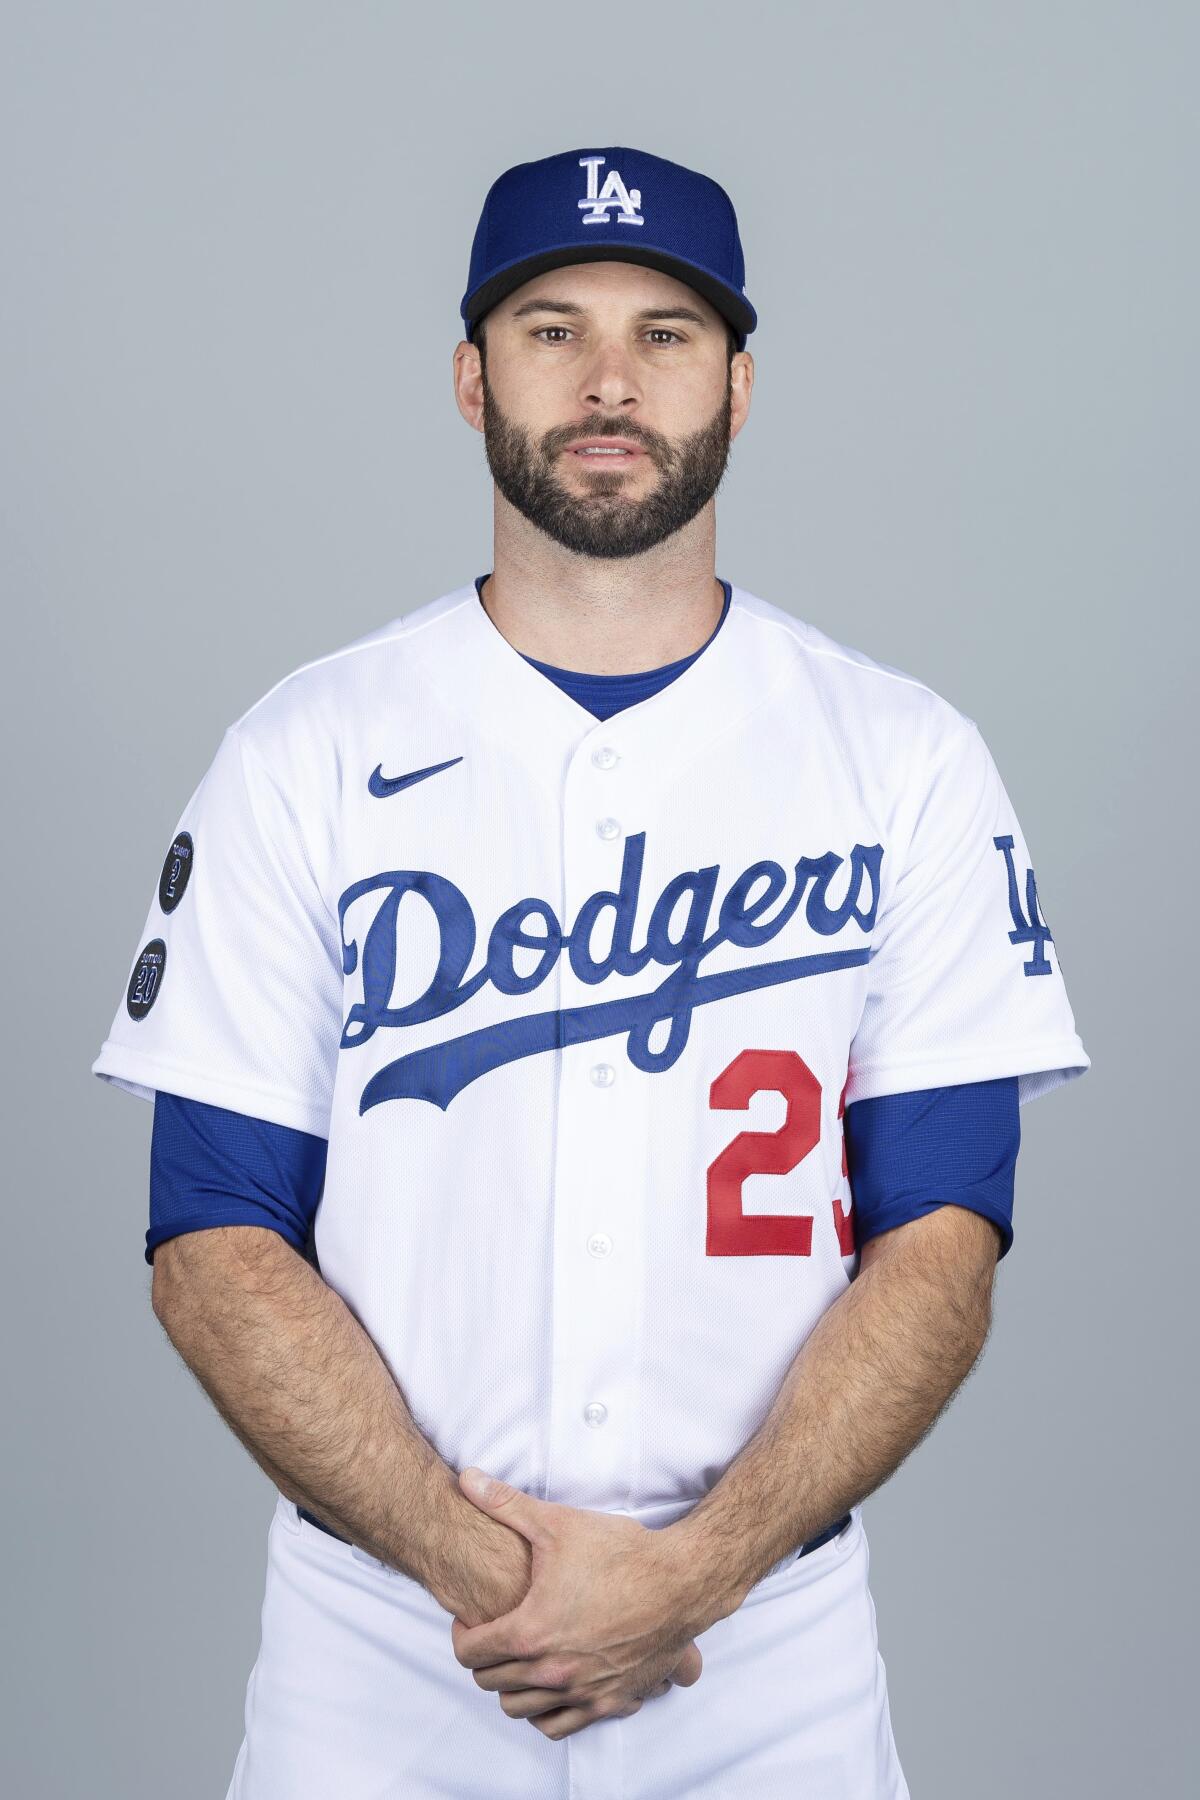 Dodgers pitcher Brandon Morrow